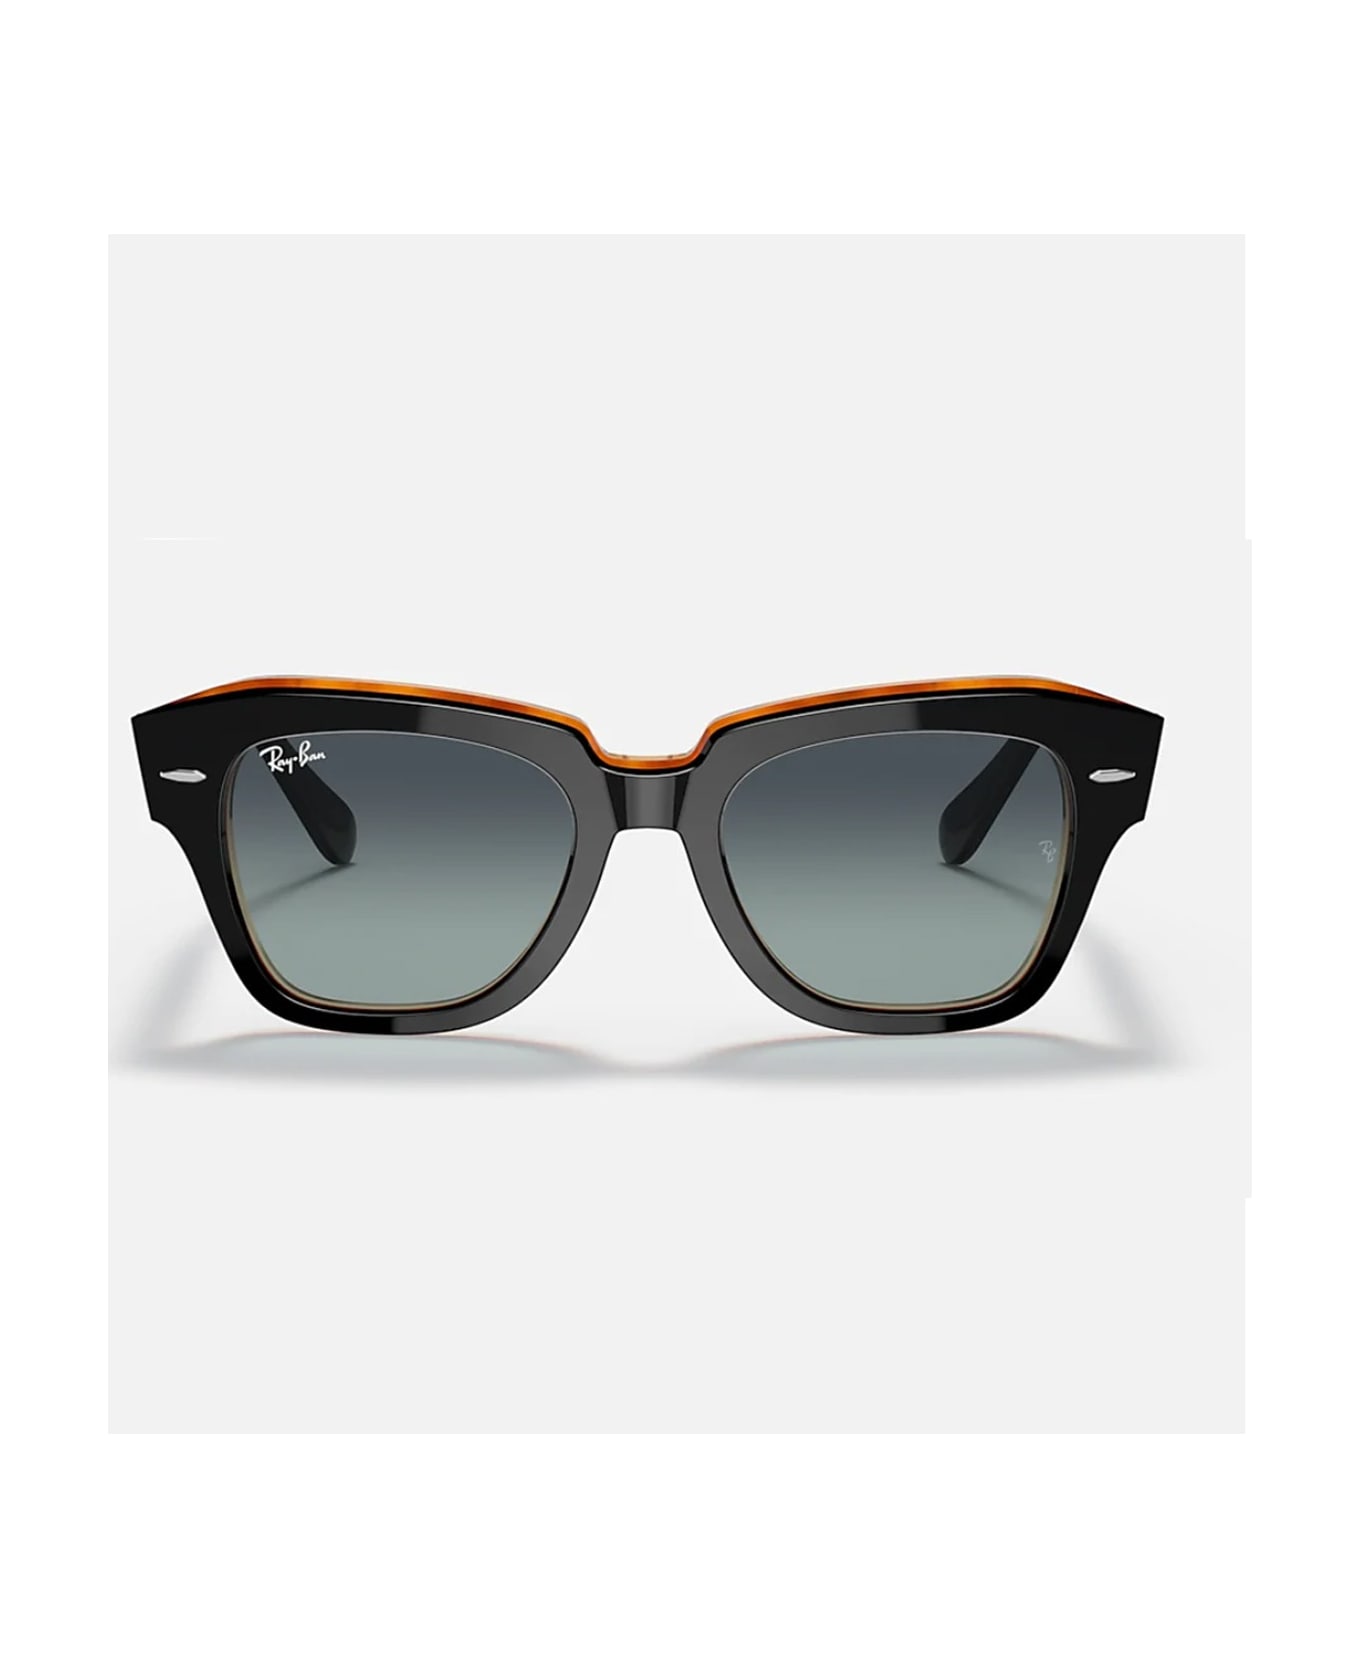 Ray-Ban Rb2186 State Street Sunglasses - Nero サングラス